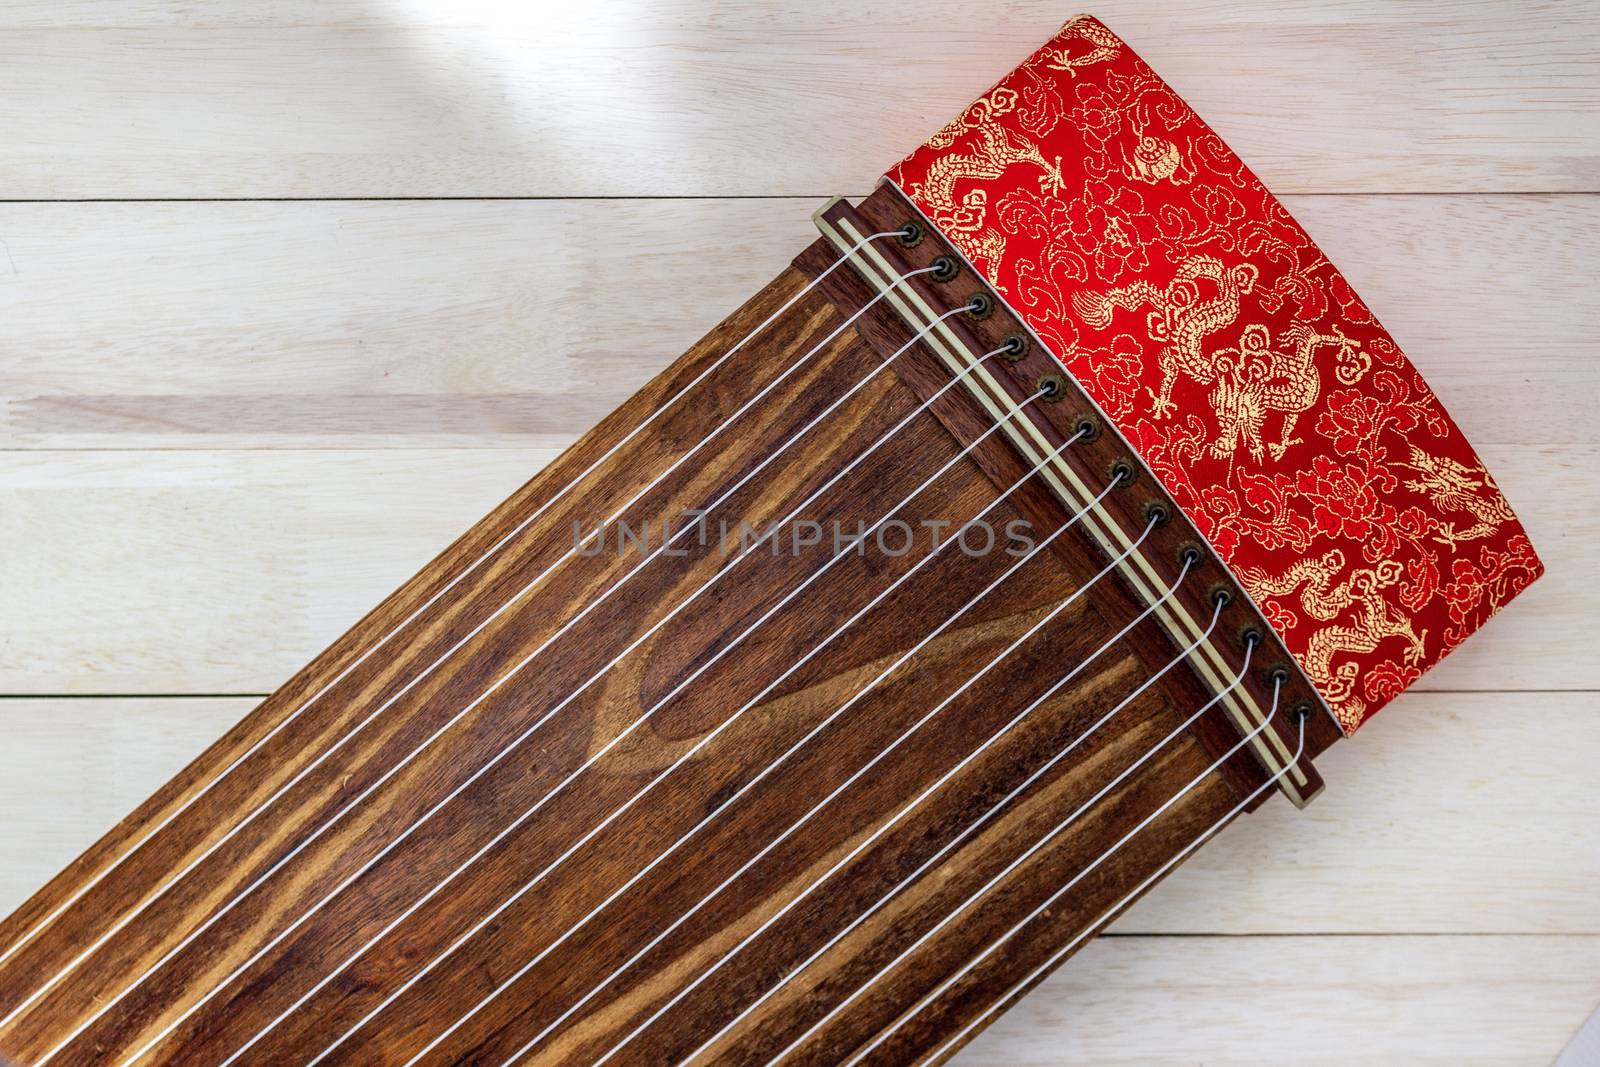 KOTO,Japanese harp,Japanese traditional instrument .